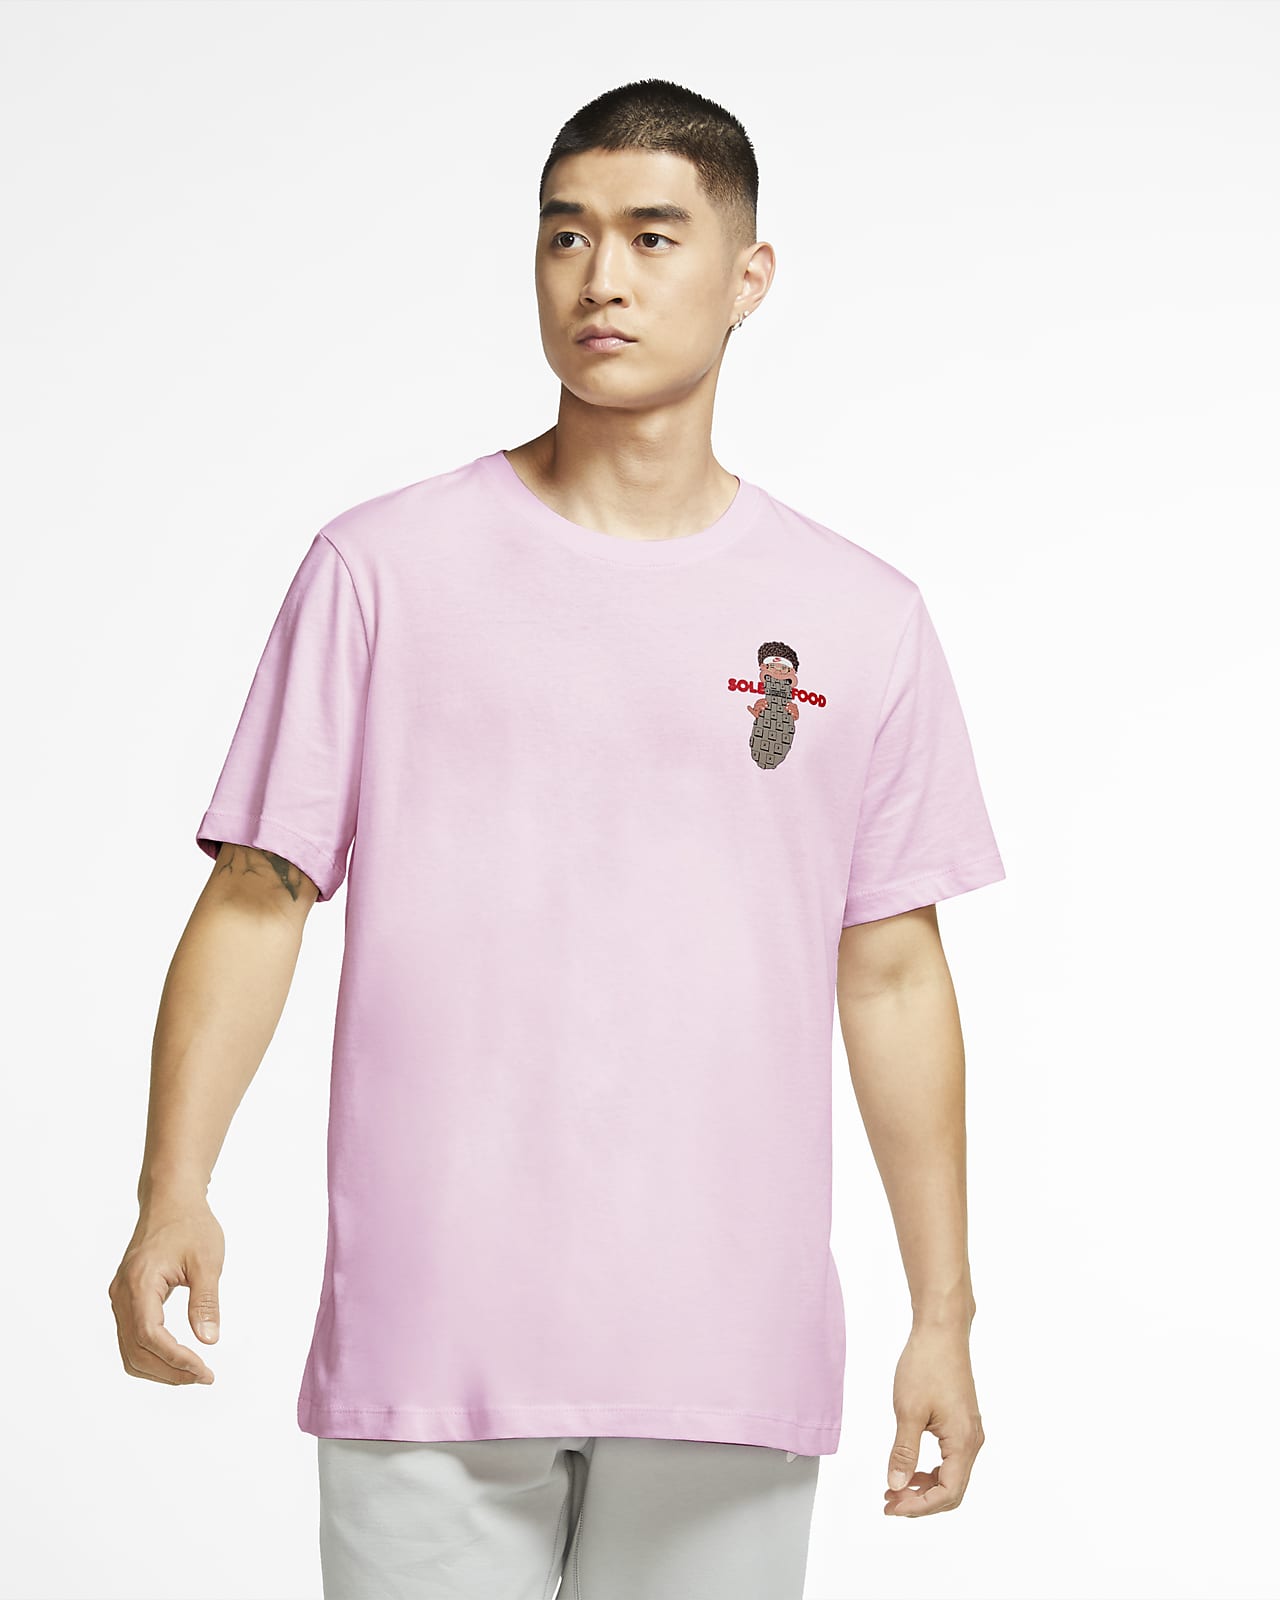 profound Incentive look Nike Sportswear Men's T-Shirt. Nike.com